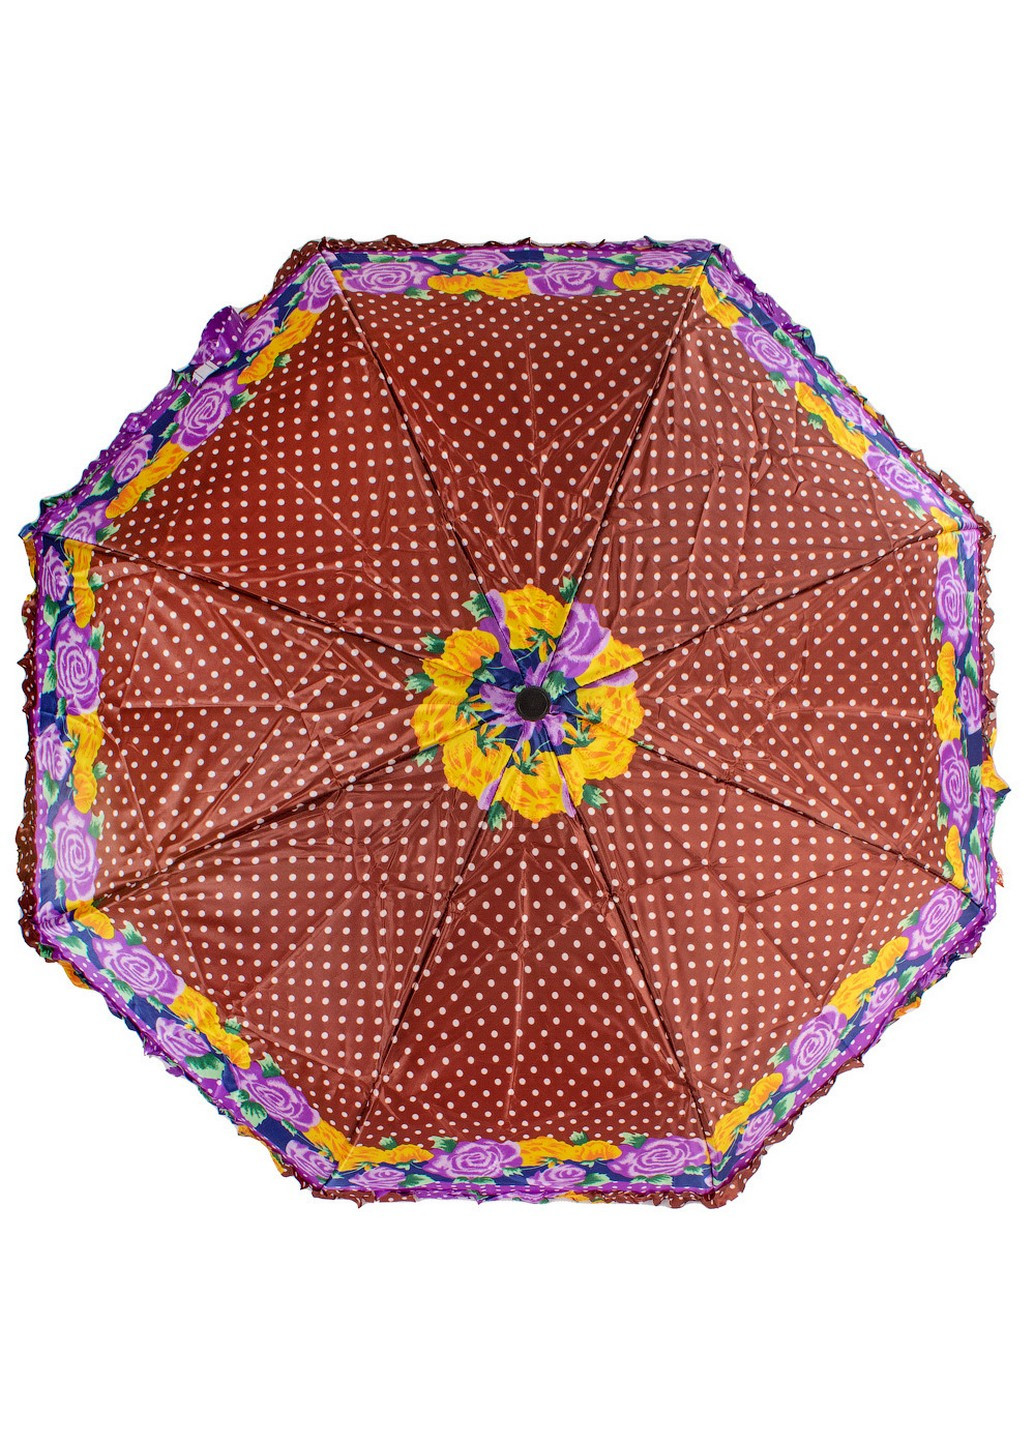 Зонт женский полуавтомат 98 см Eterno (255375207)